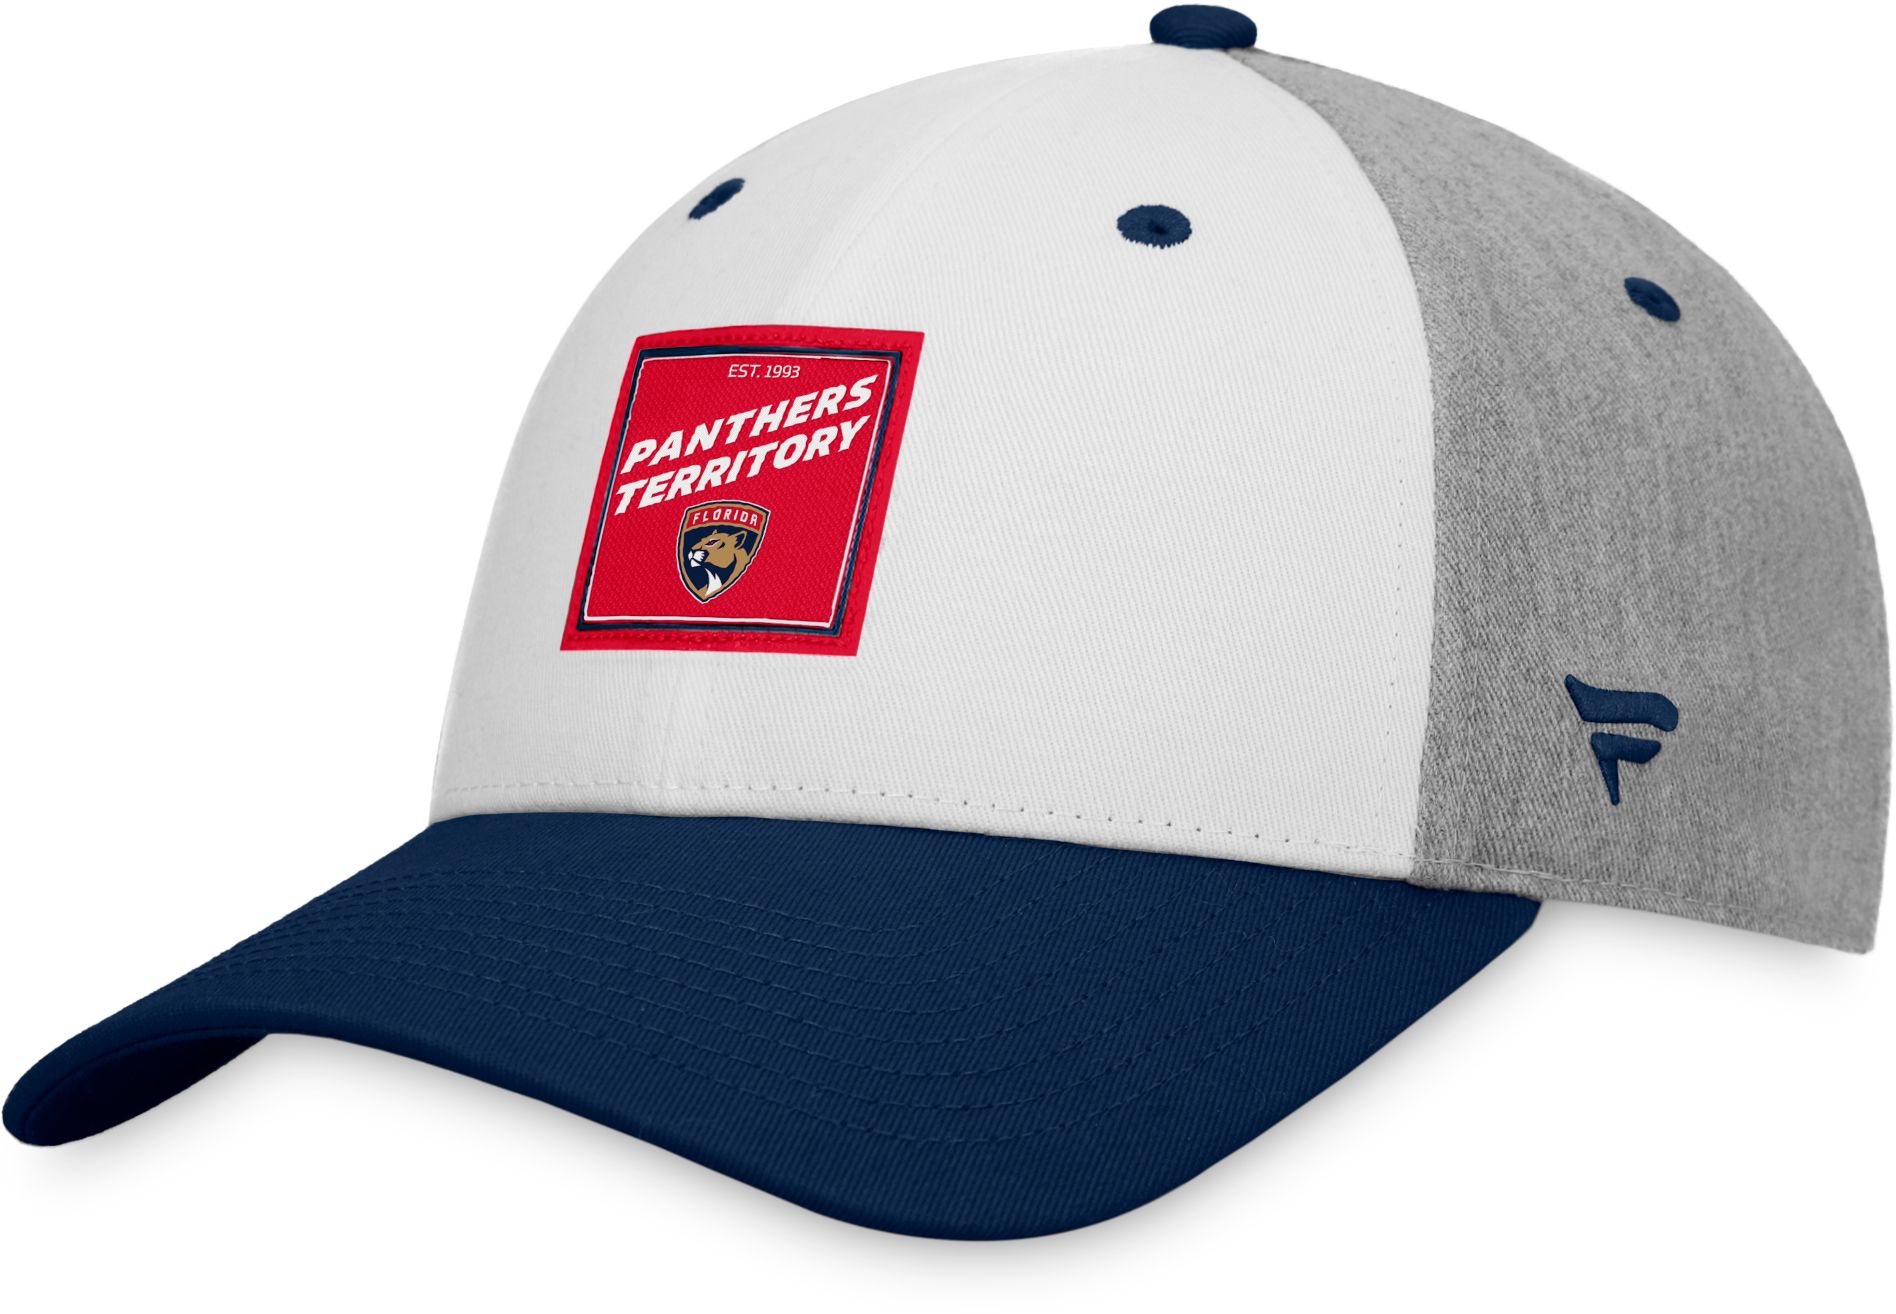 Fanatics Rangers Authentic Pro Rink Snapback Hat